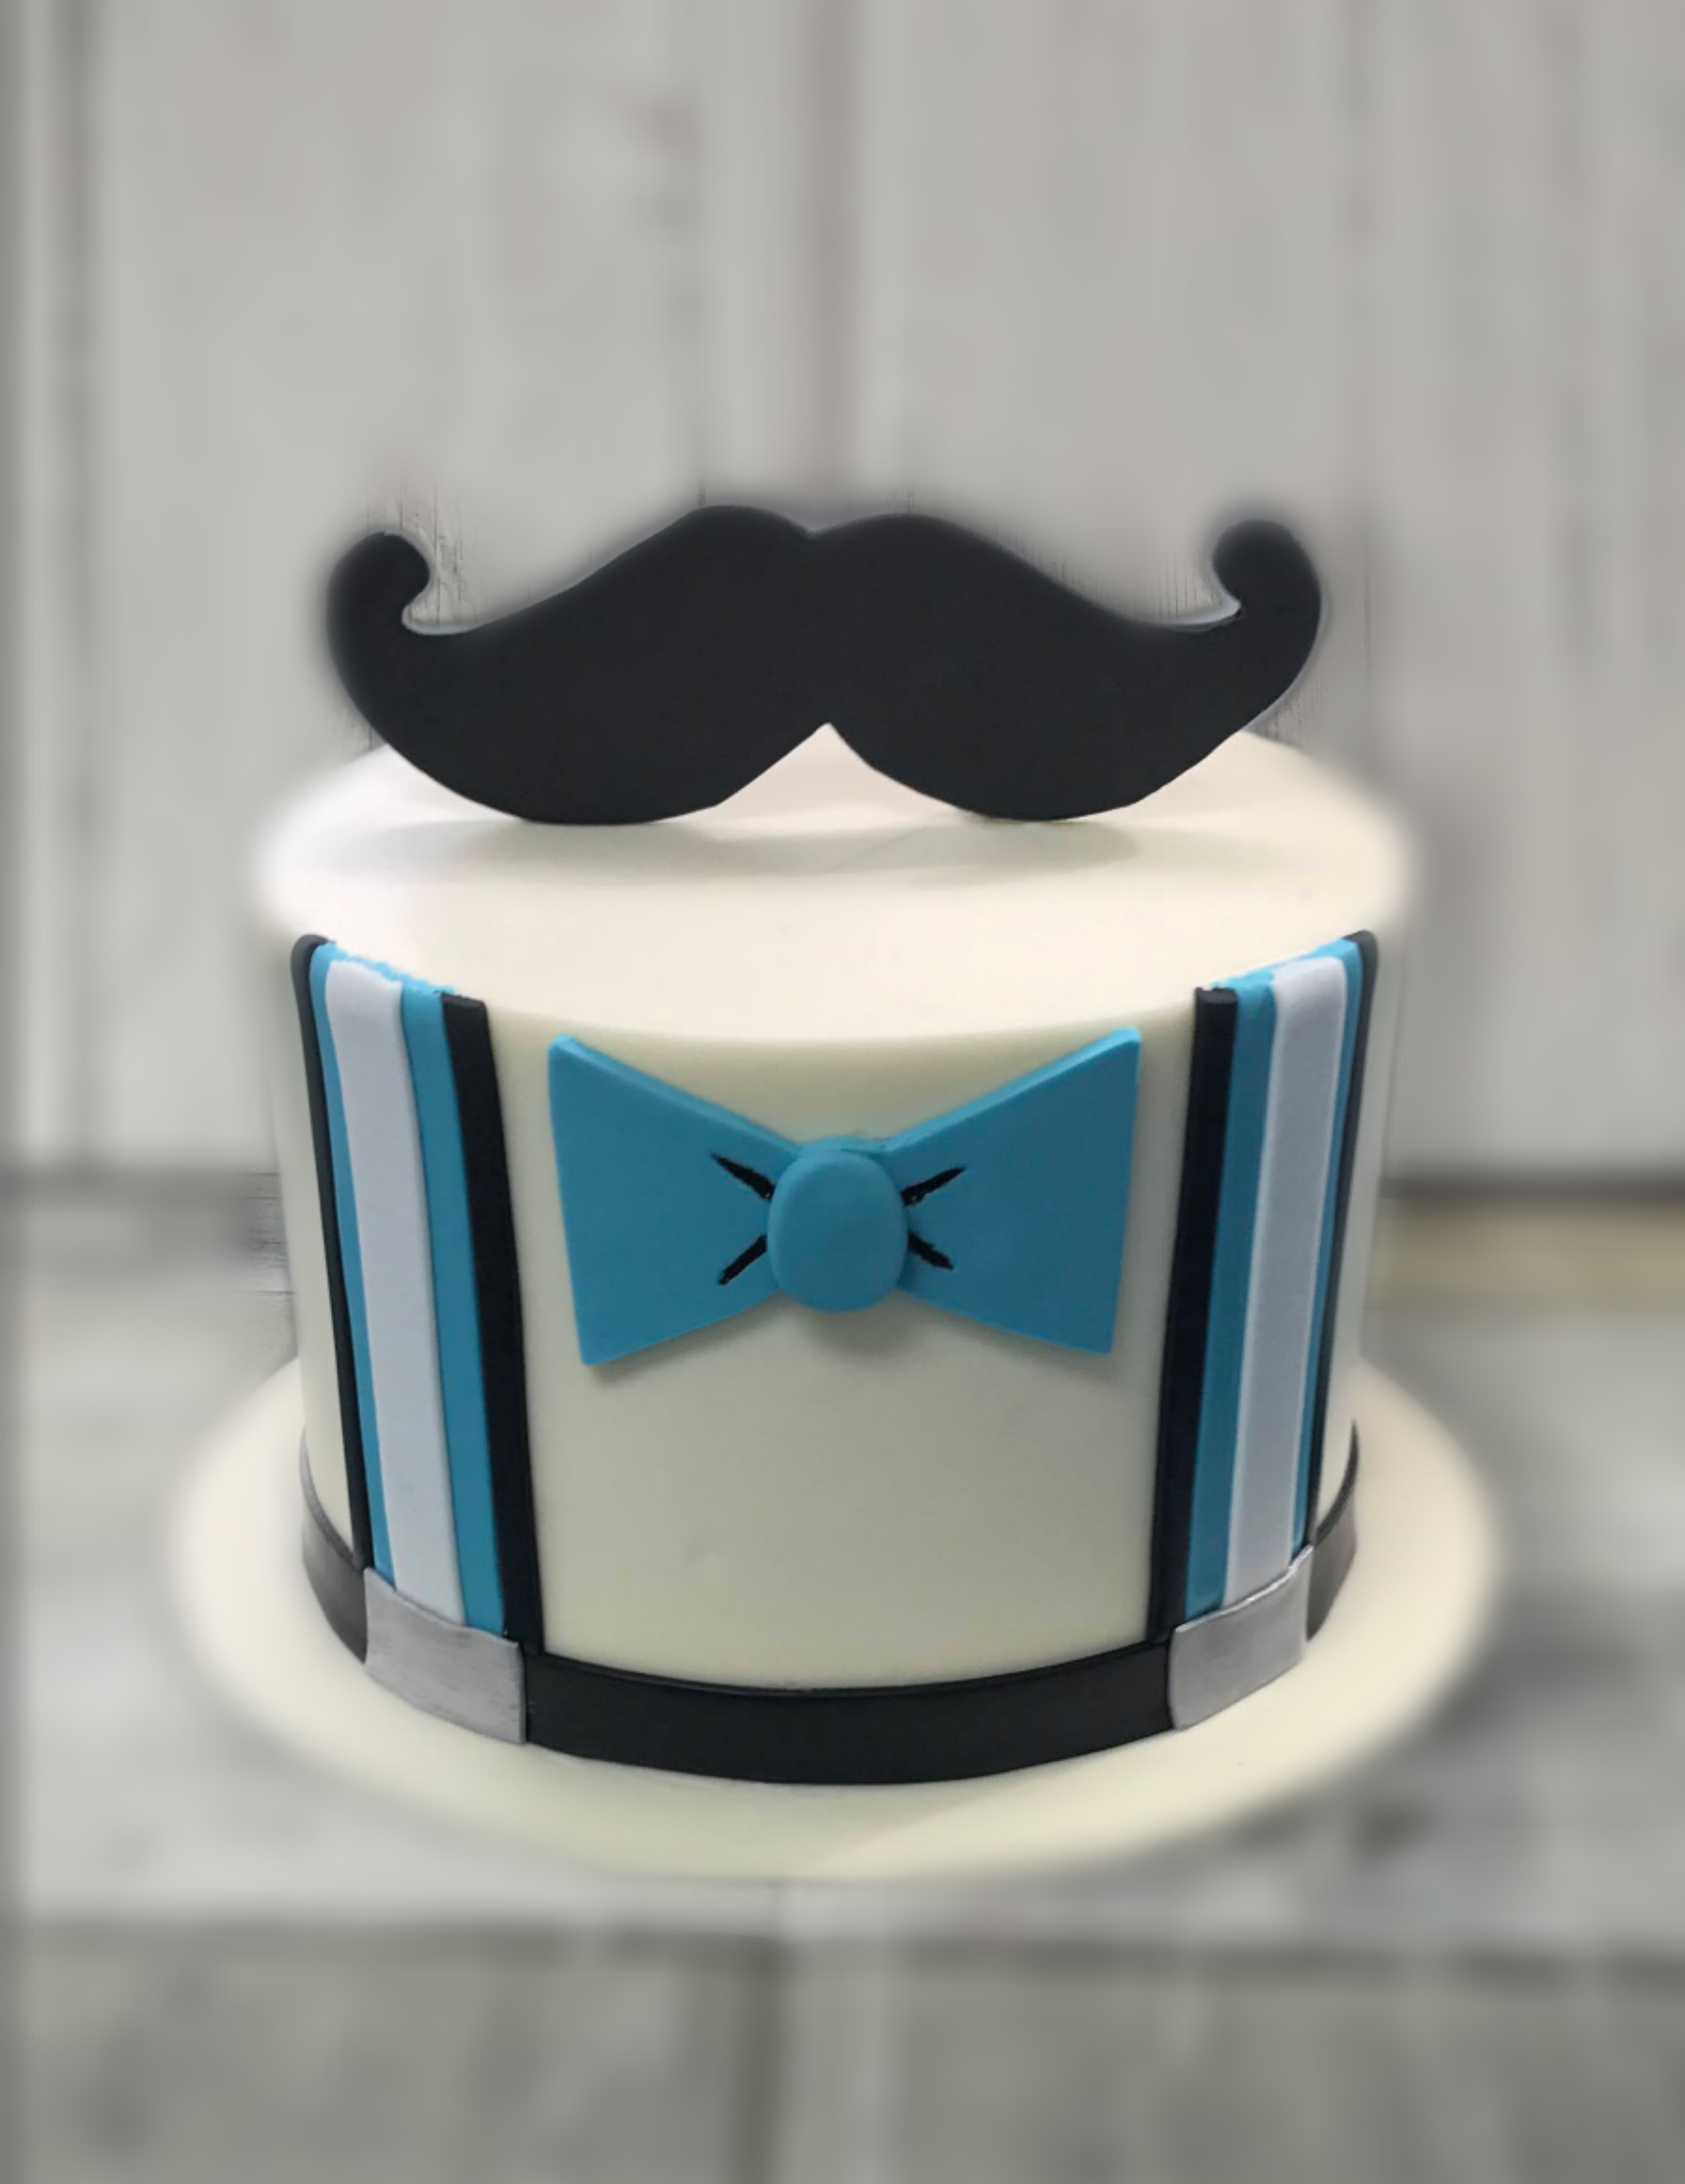 Sugarlab Cakes - Little Man Mustache birthday cake 🎂🎊 #sugarlabcakes  #littleman #littlemantheme #littlemancake #mustache #mustachecake  #sugarpaste #instafood #instapastry #instacakes #birthday #birthdaycake  #fondantcake #sugart #zaxaropasta ...